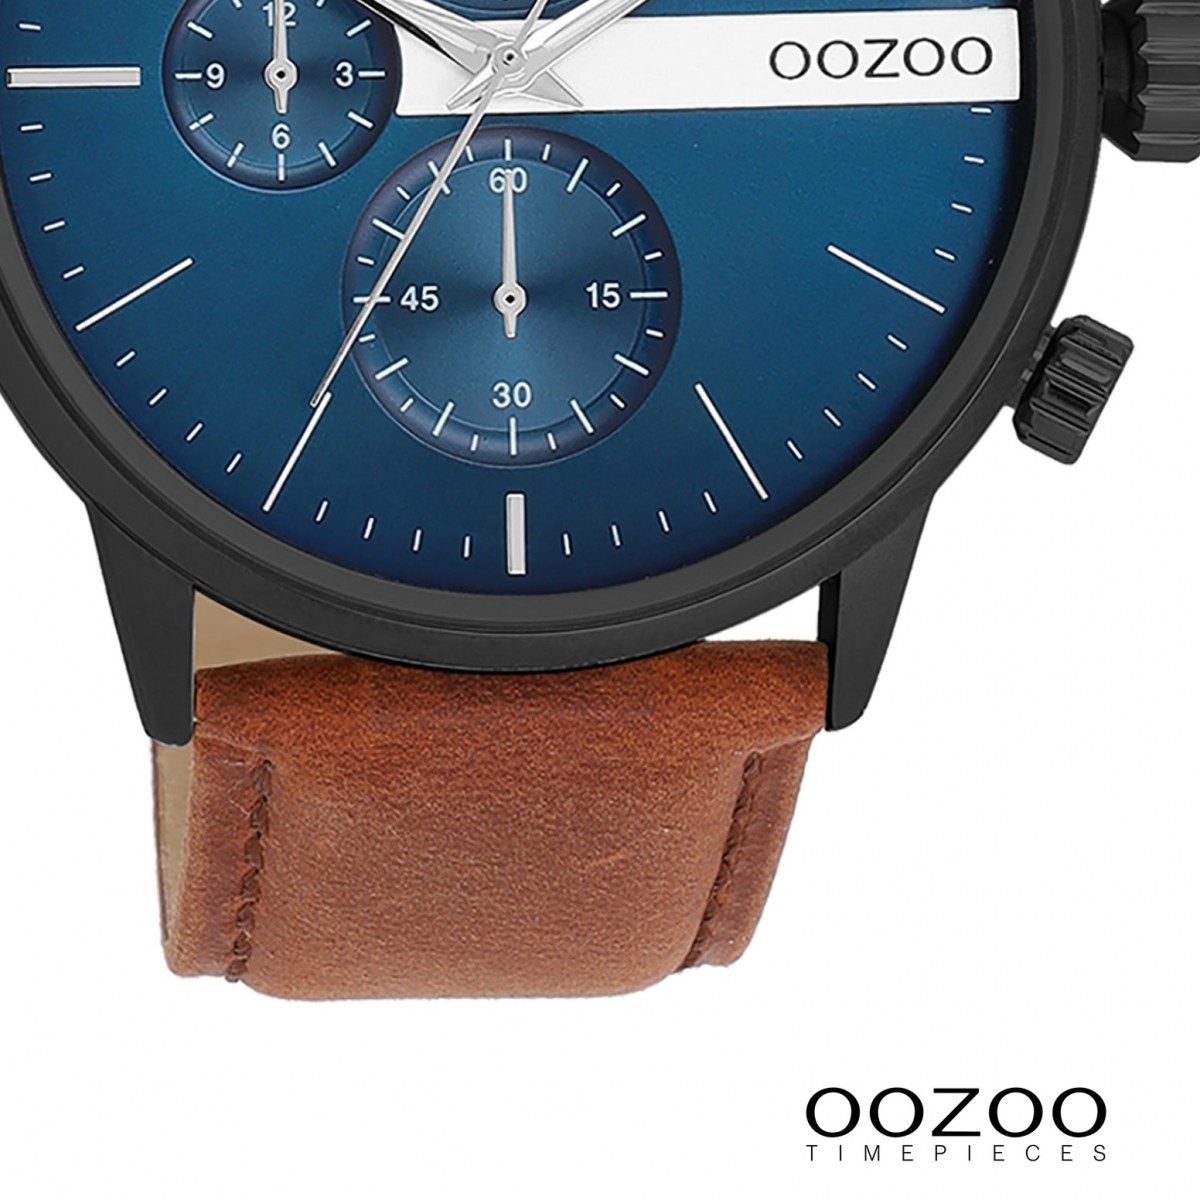 UOC11222 Armbanduhr Oozoo Analog braun Leder Herren Timepieces